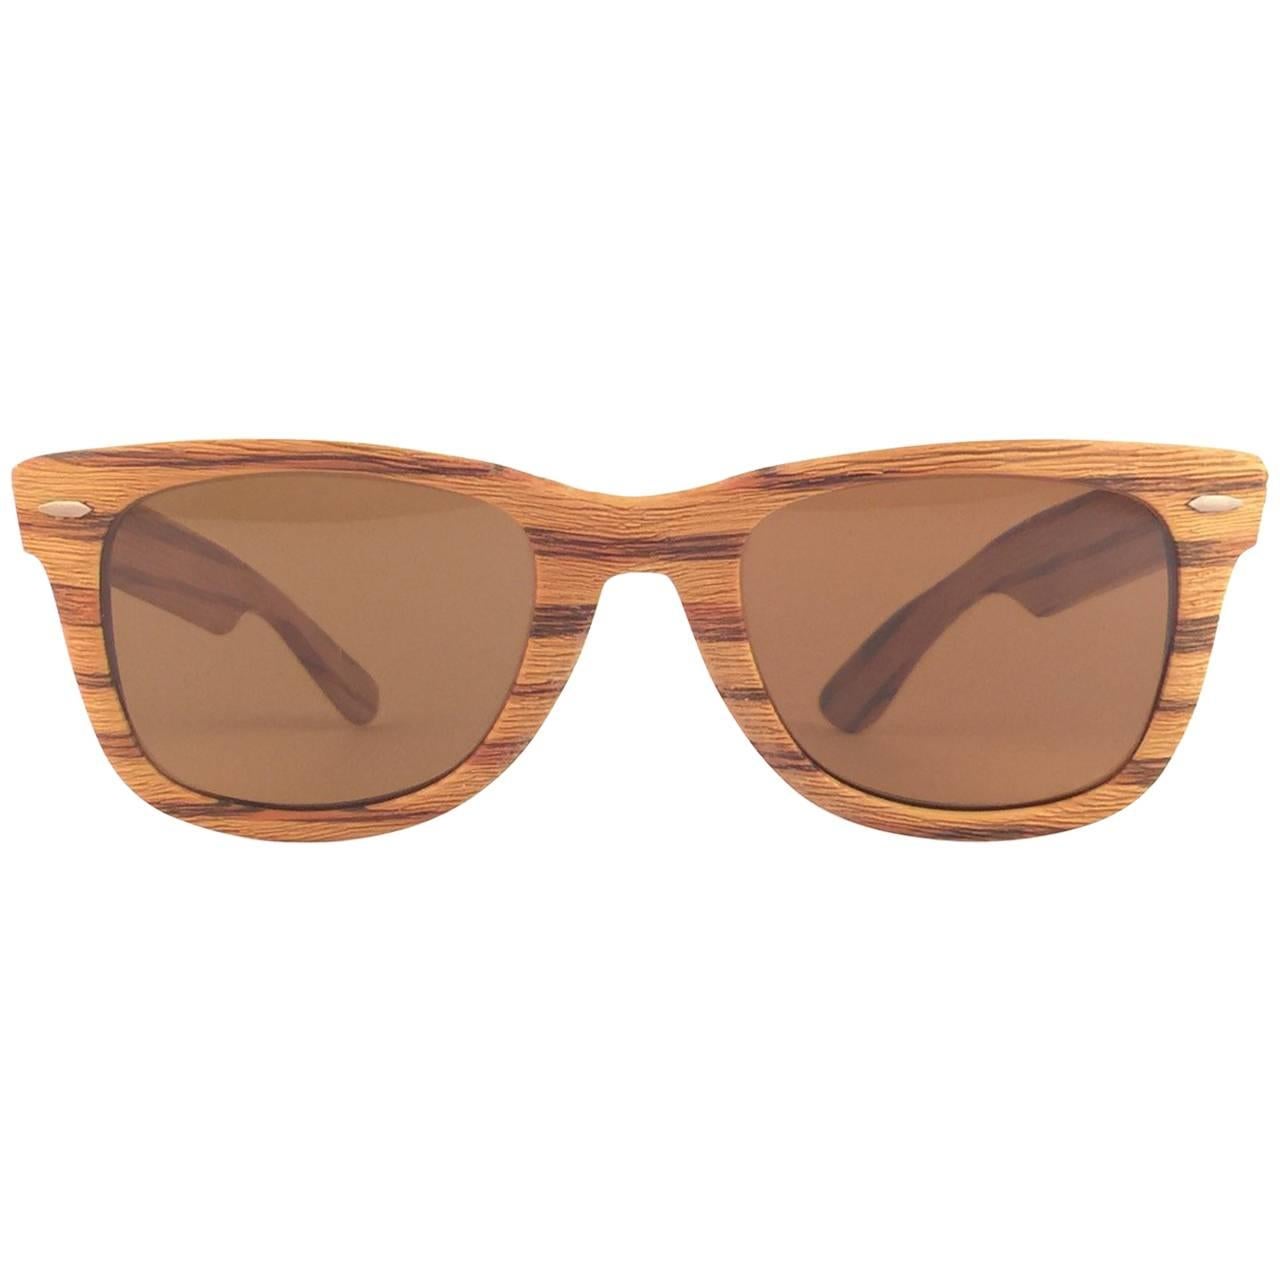 Share 150+ woodies sunglasses super hot